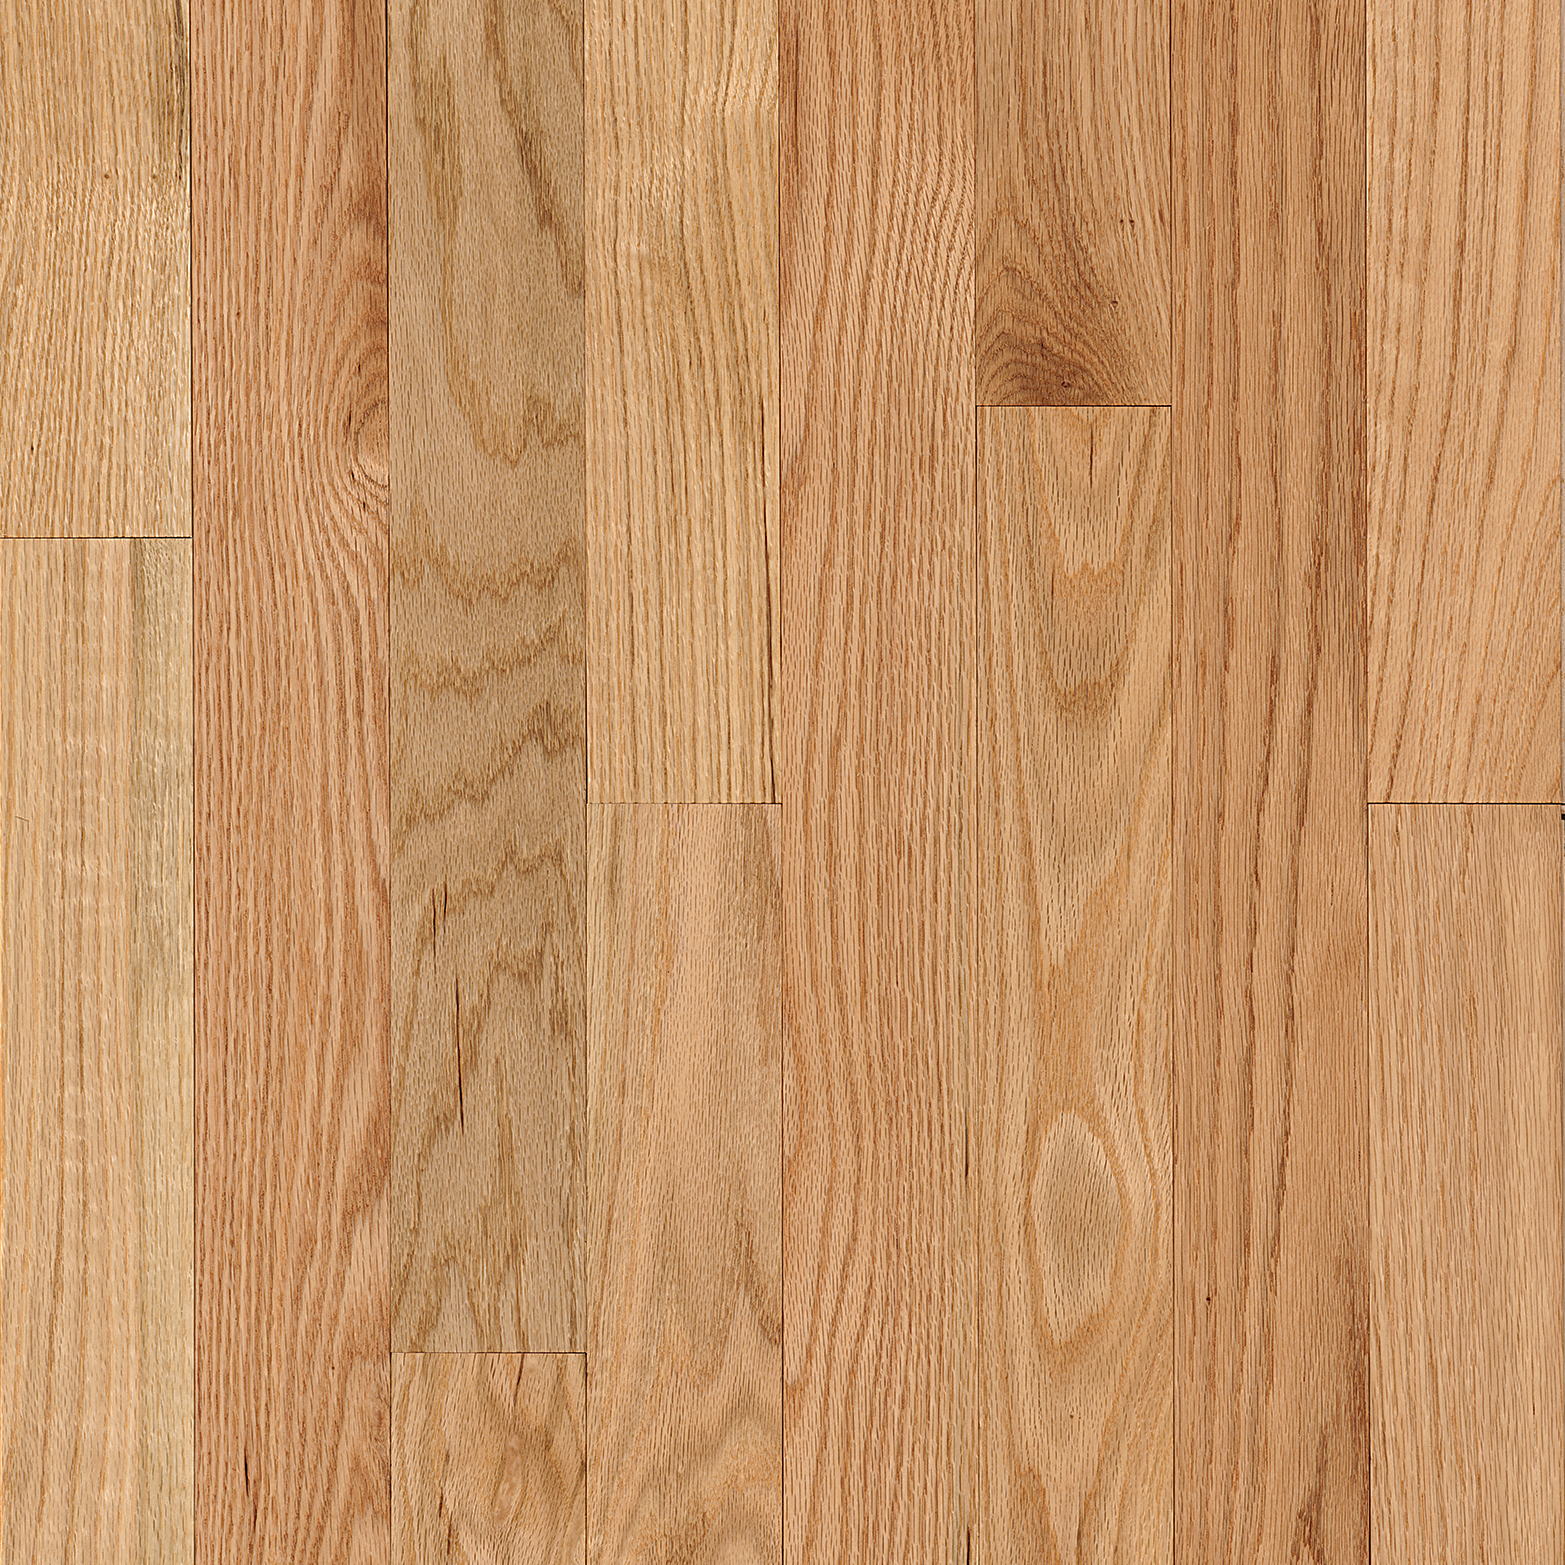 Oak Solid Hardwood C131, Bruce Hardwood Floor Polish